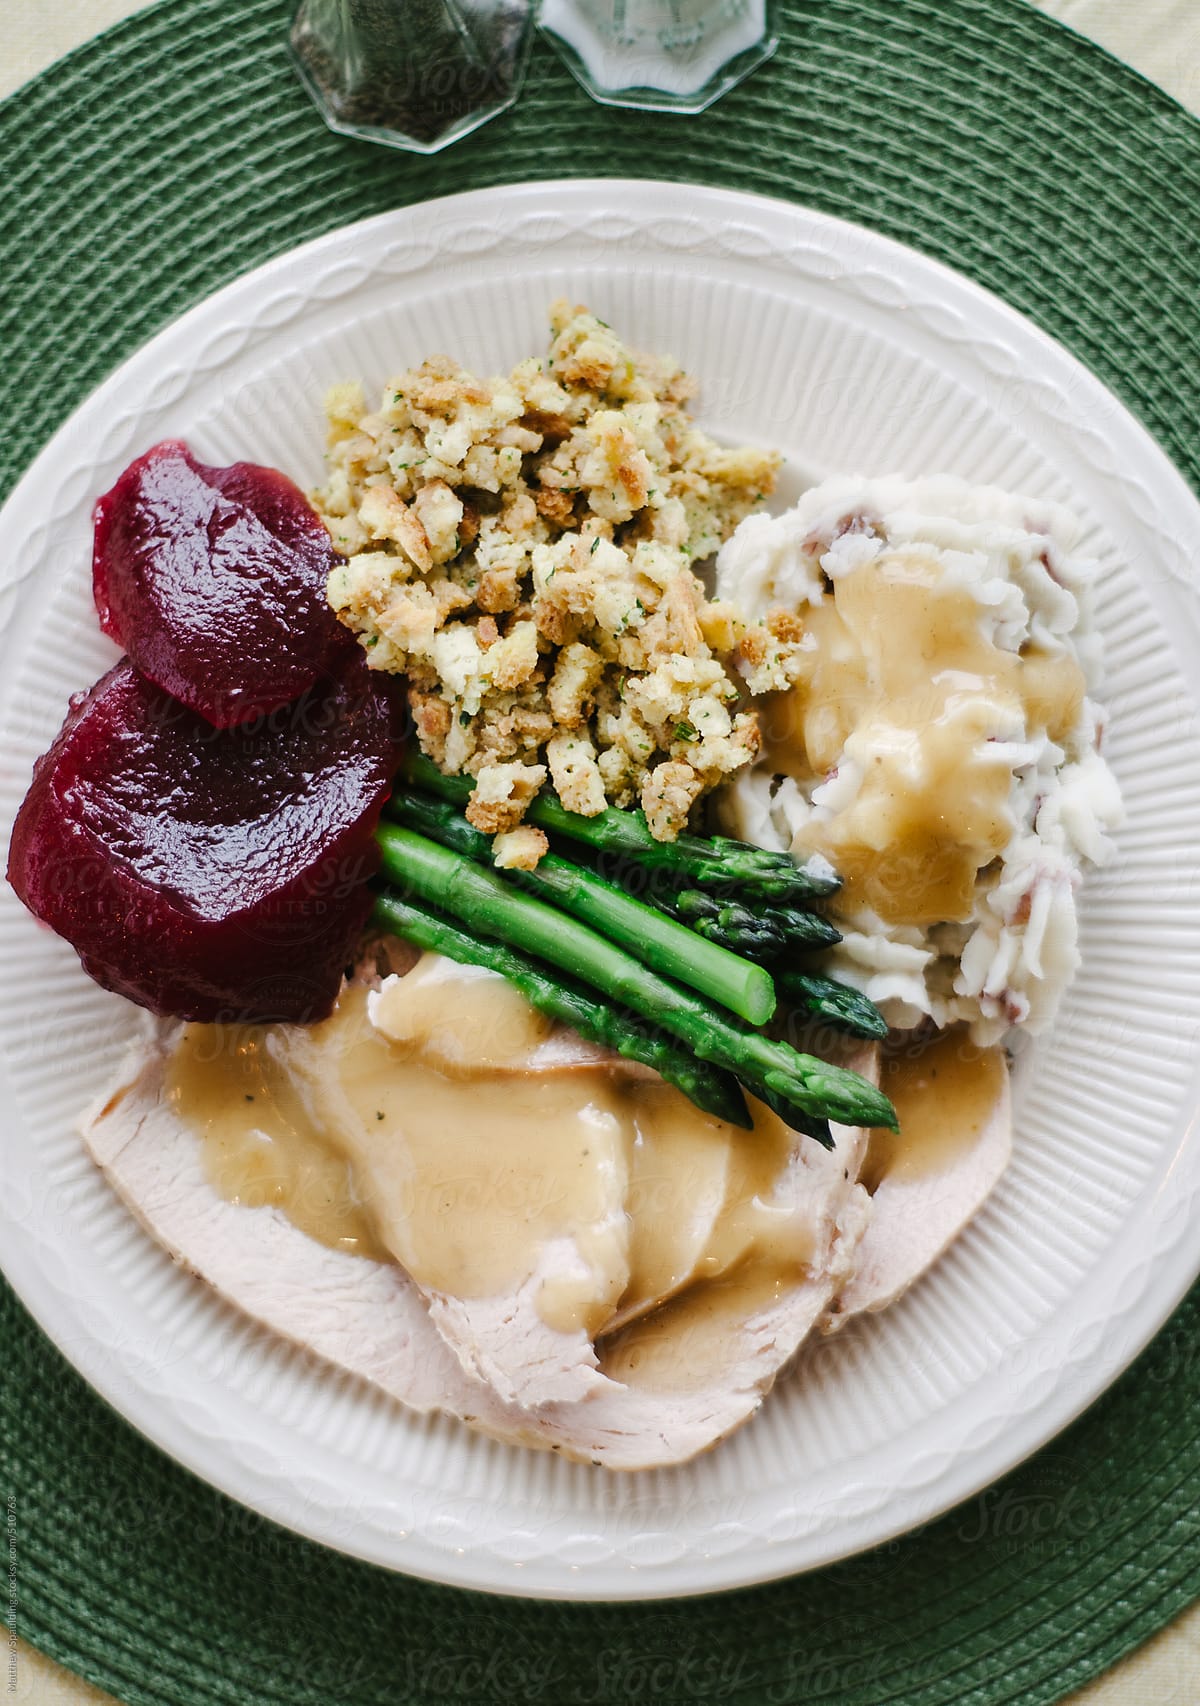 Turkey thanksgiving dinner meal on plate